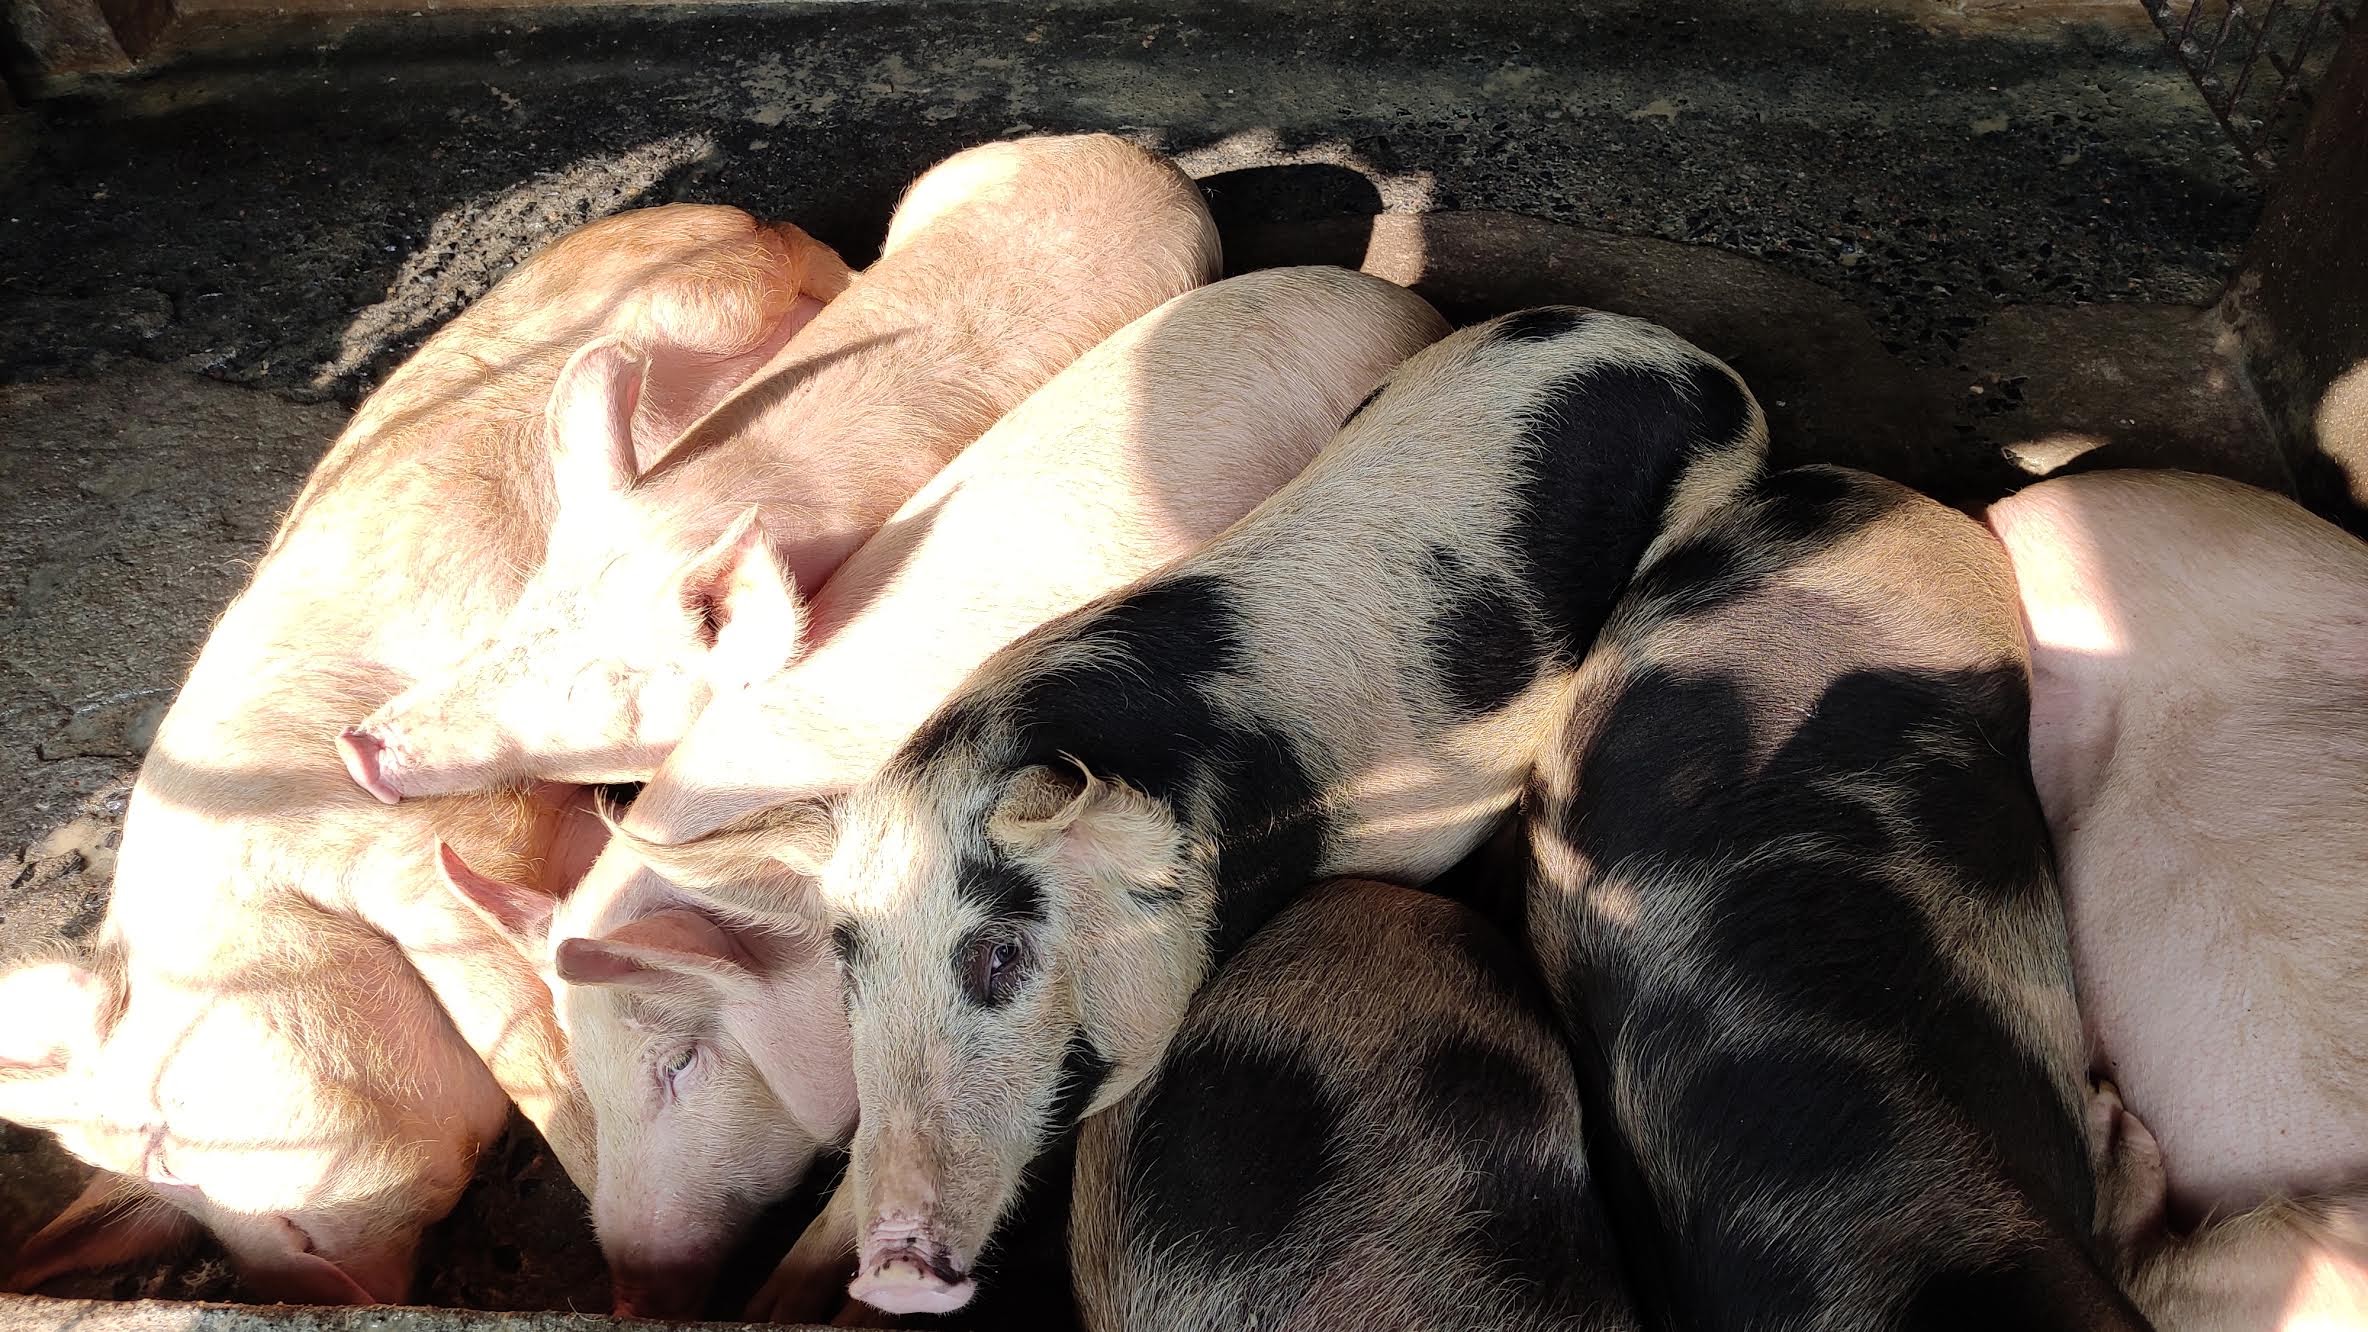 pigs huddled together sleeping on a pig farm